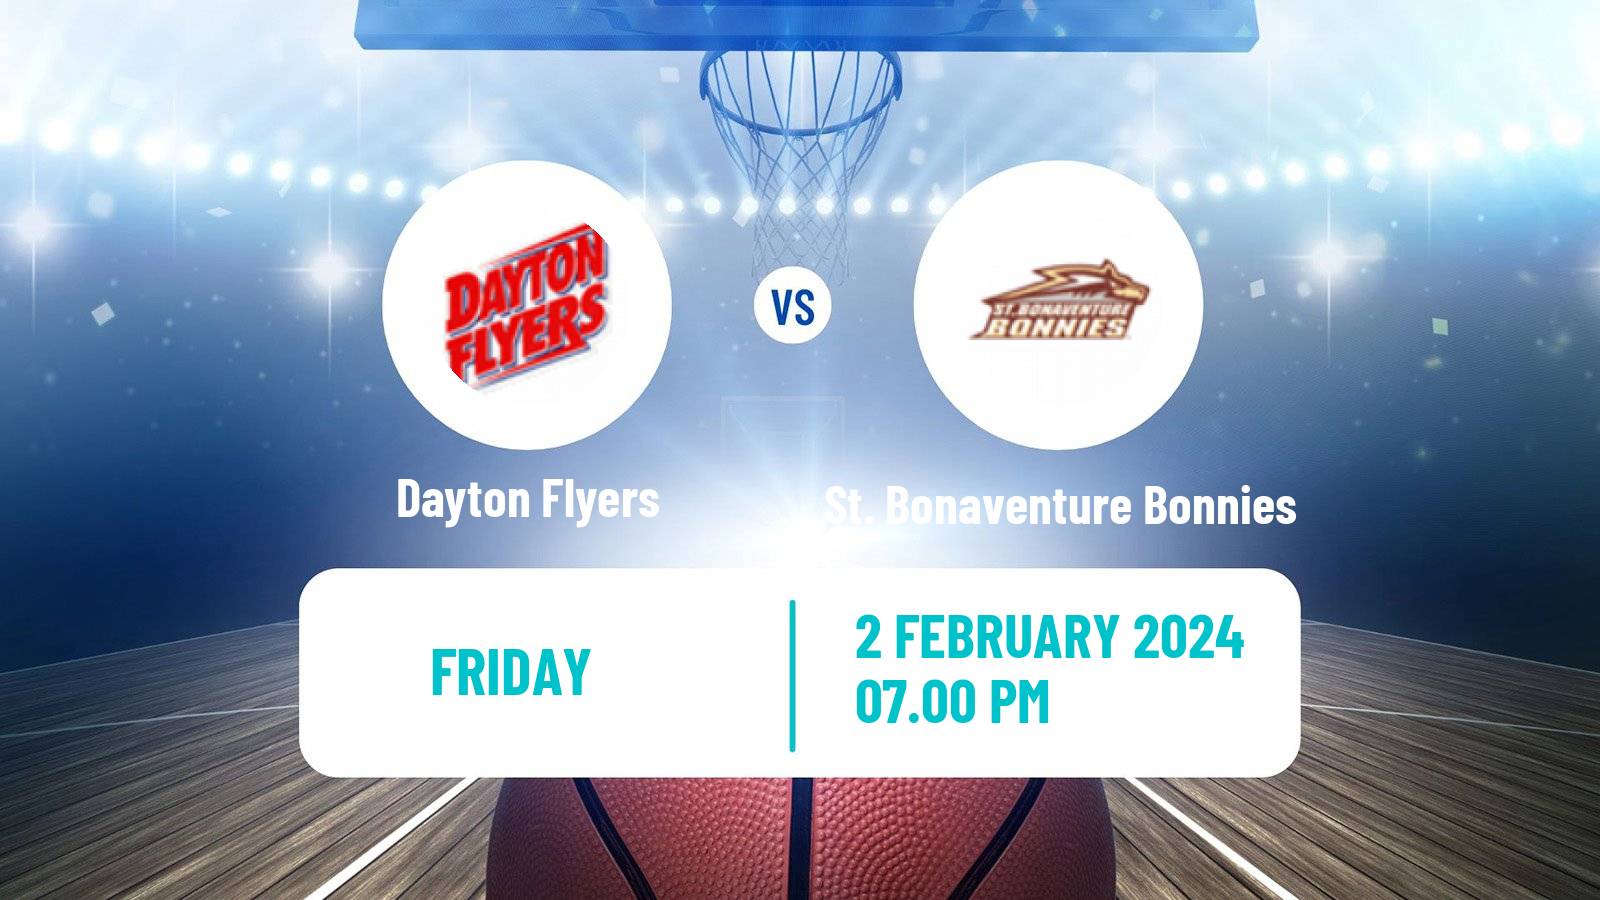 Basketball NCAA College Basketball Dayton Flyers - St. Bonaventure Bonnies